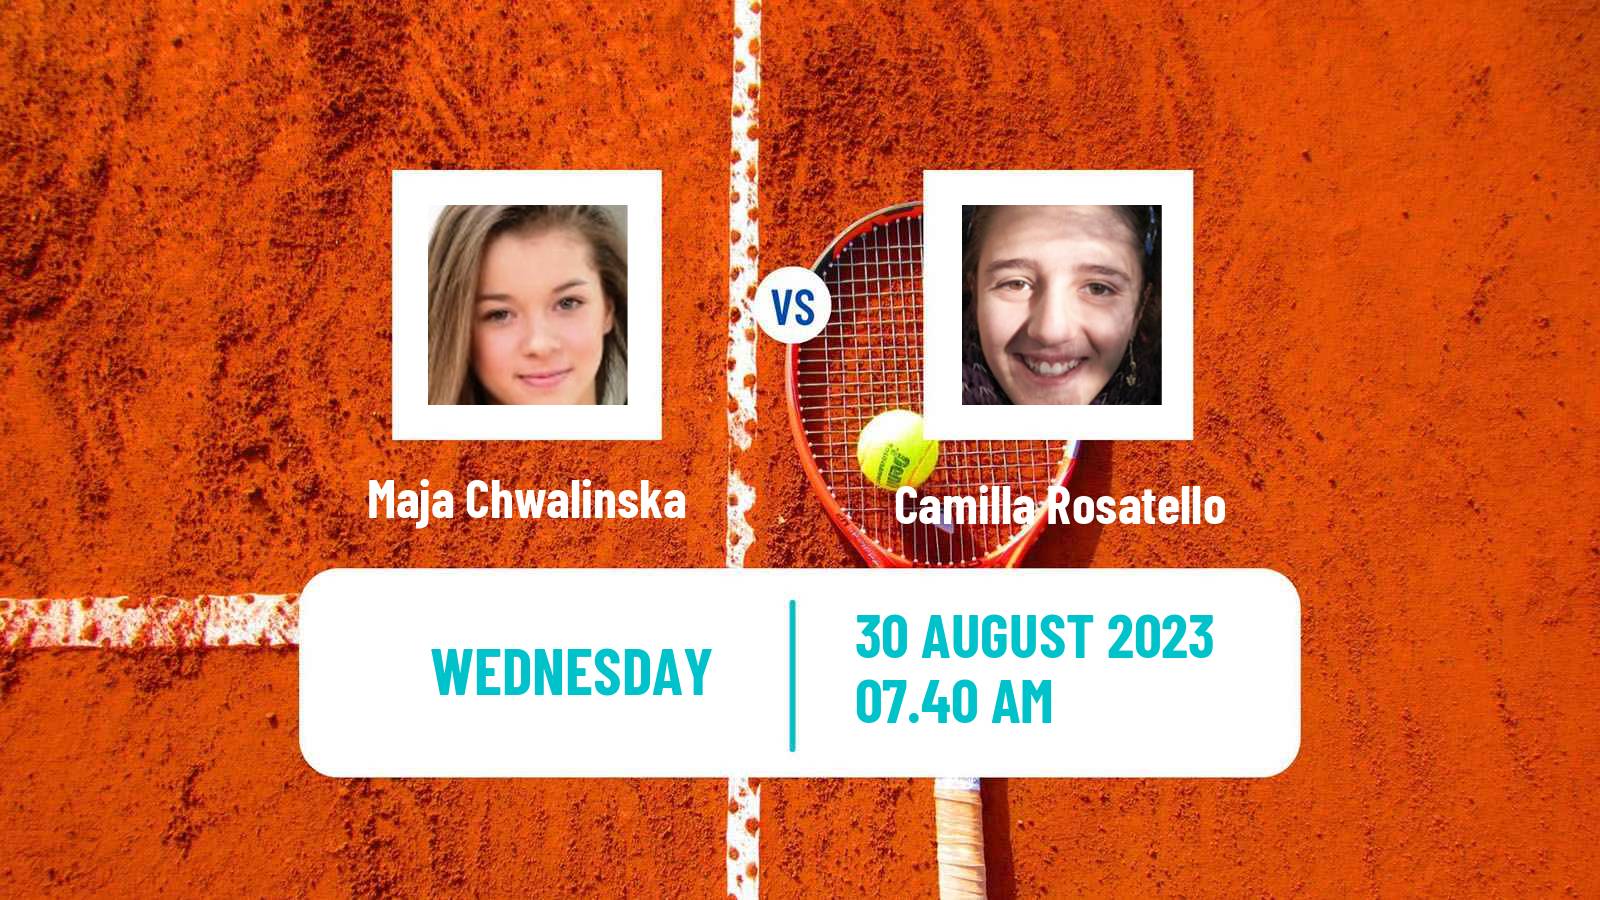 Tennis ITF W60 Prague 2 Women Maja Chwalinska - Camilla Rosatello